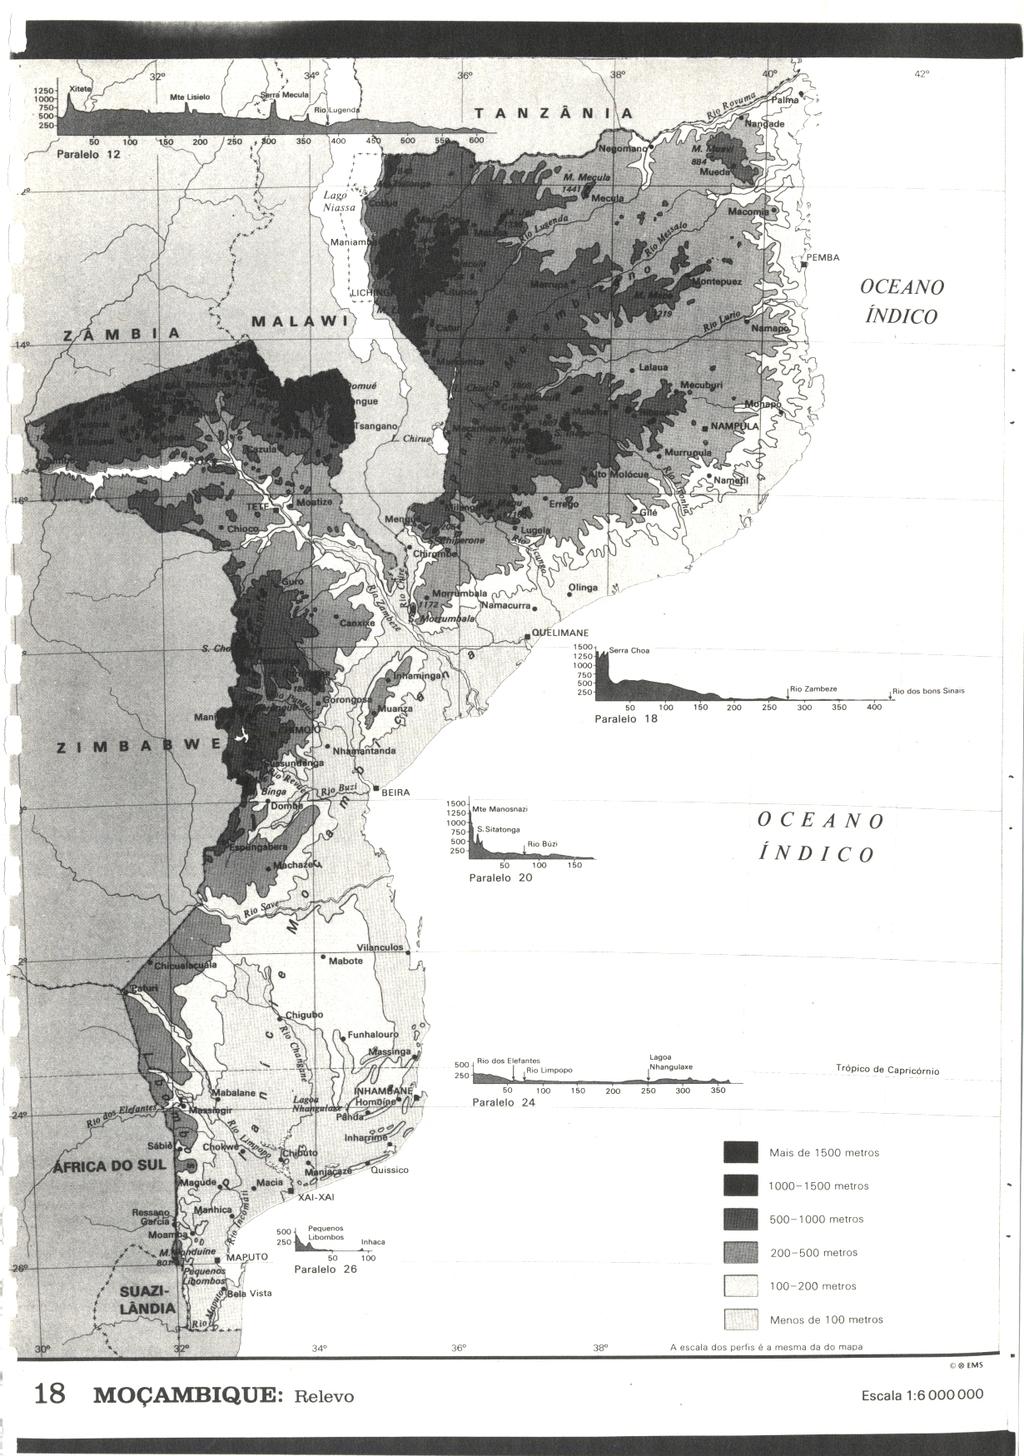 Gravura nº 2. Mapa de Moçambique Relevo e Hidrografia.